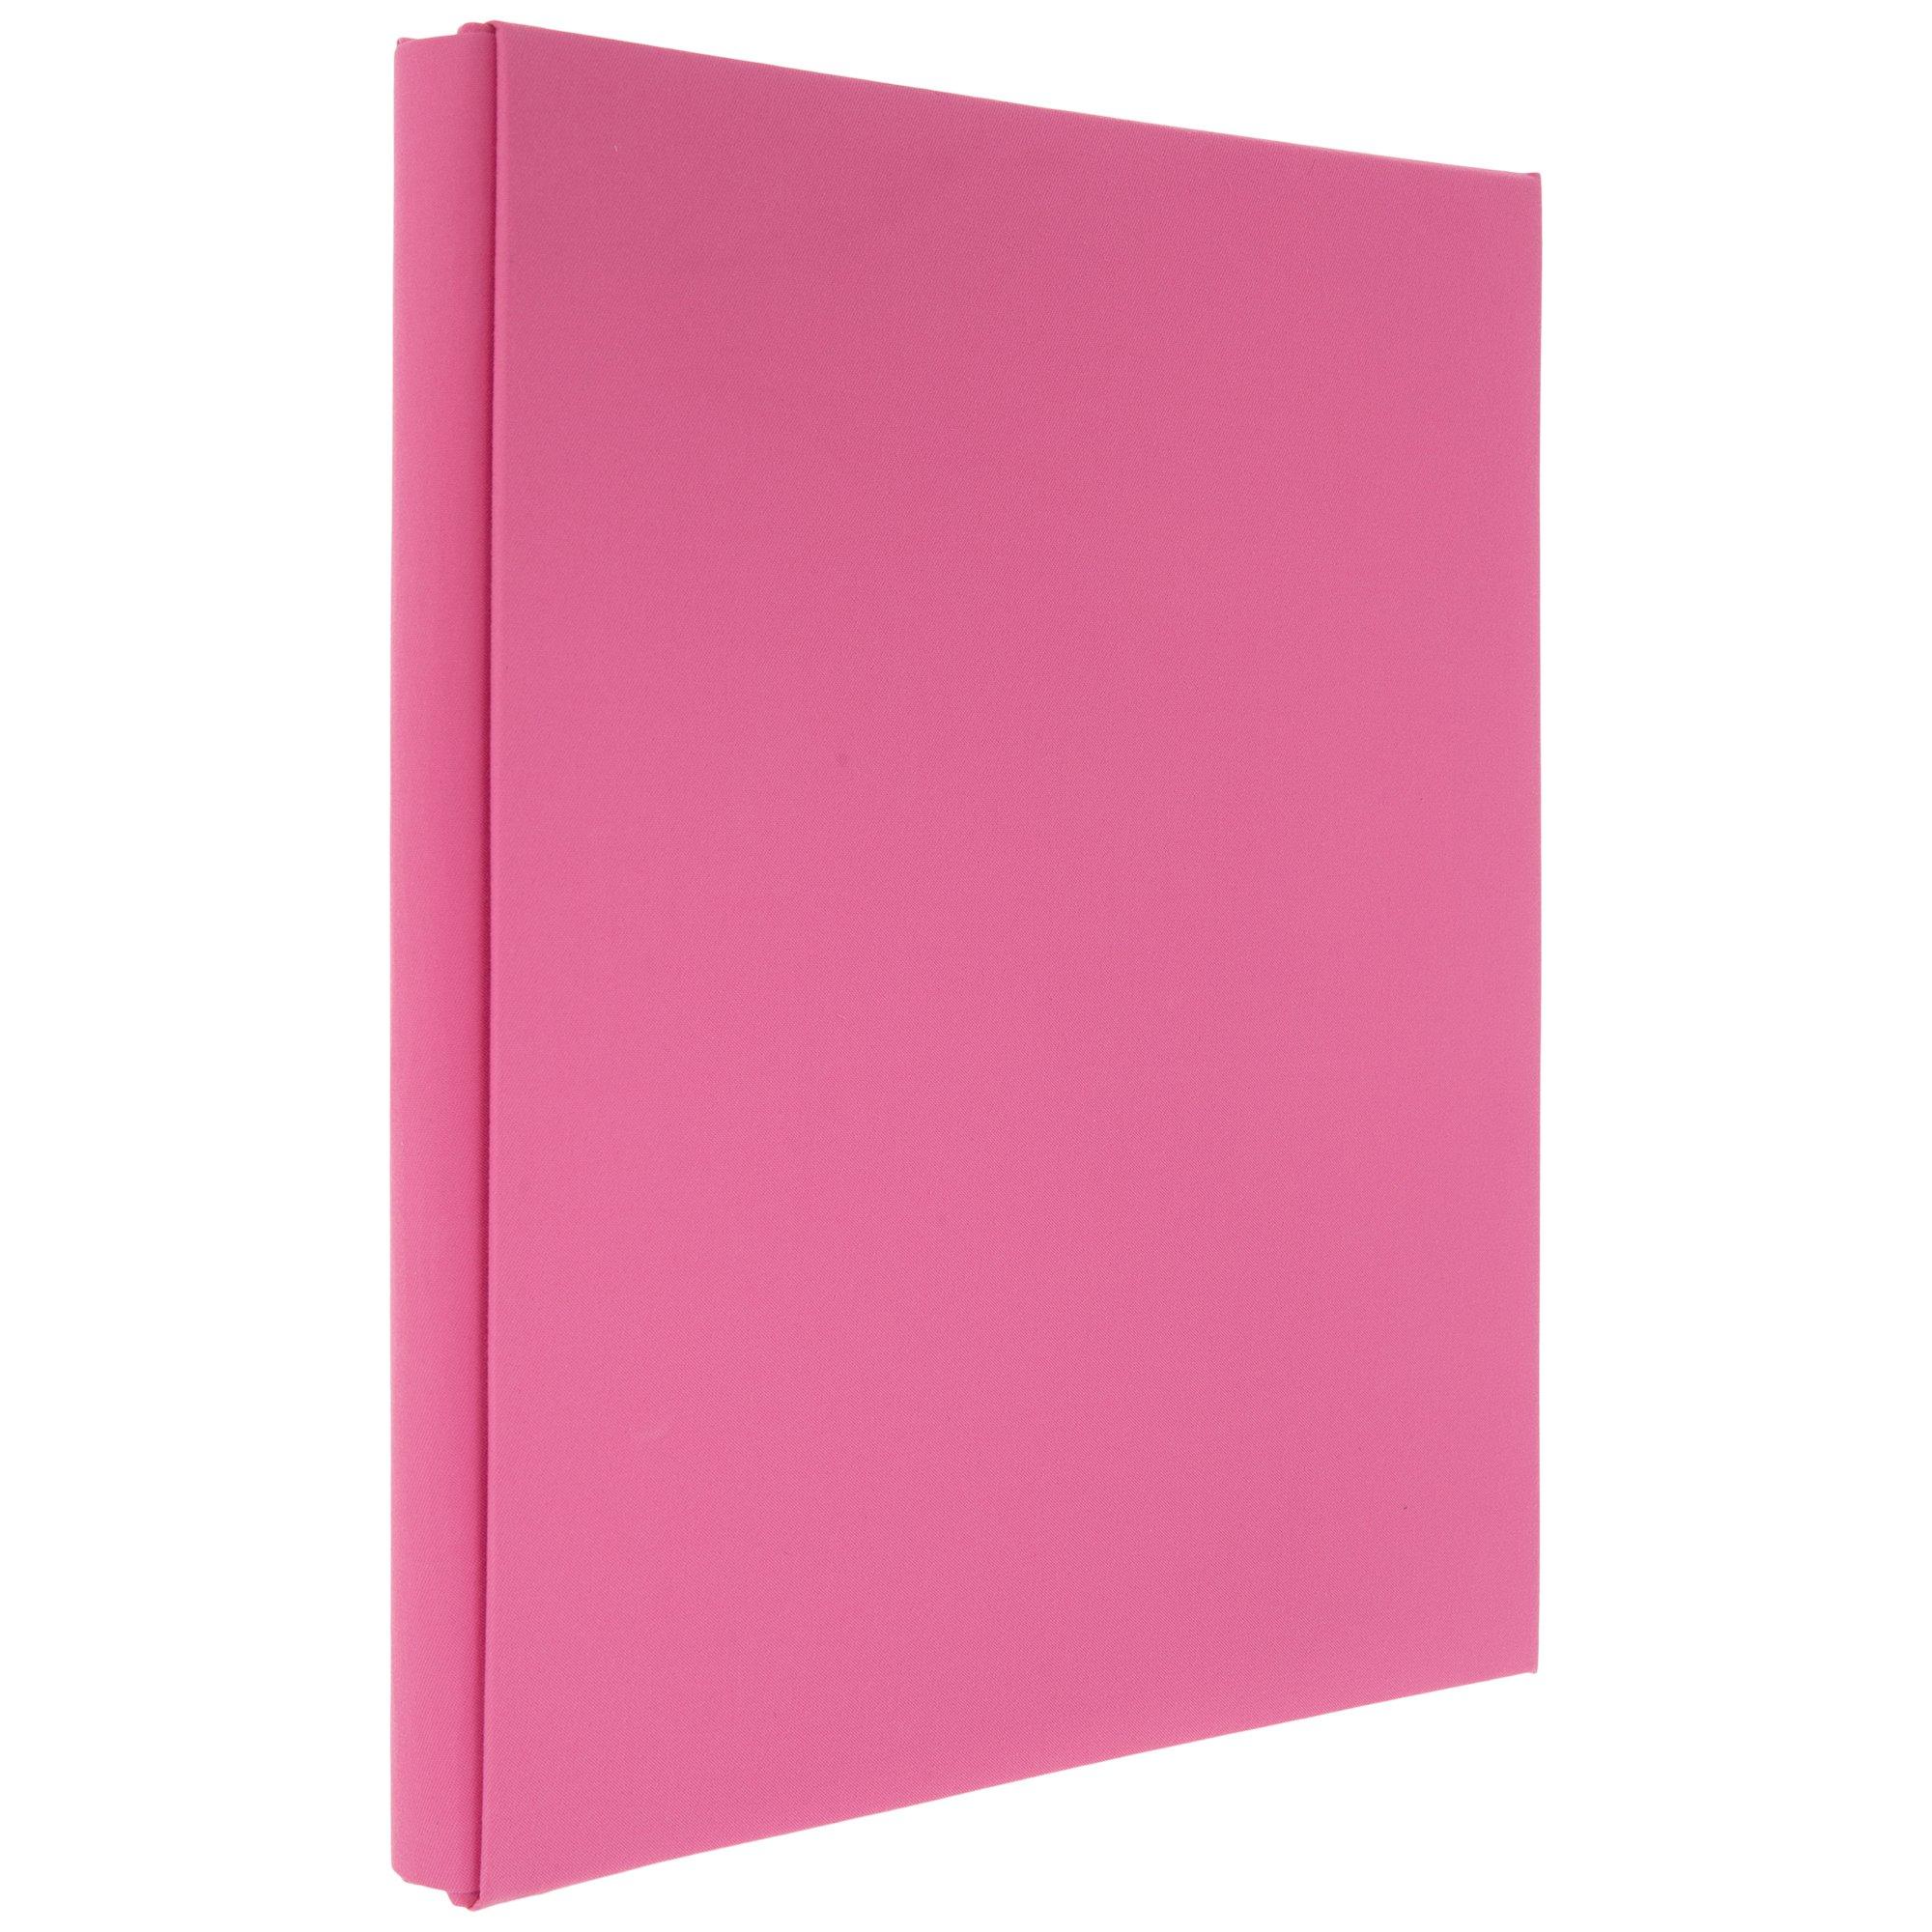 Never Ever Land Scrapbooks + Never Ever Land Scrapbook Album.  12×10″ Pink Scrap Book.